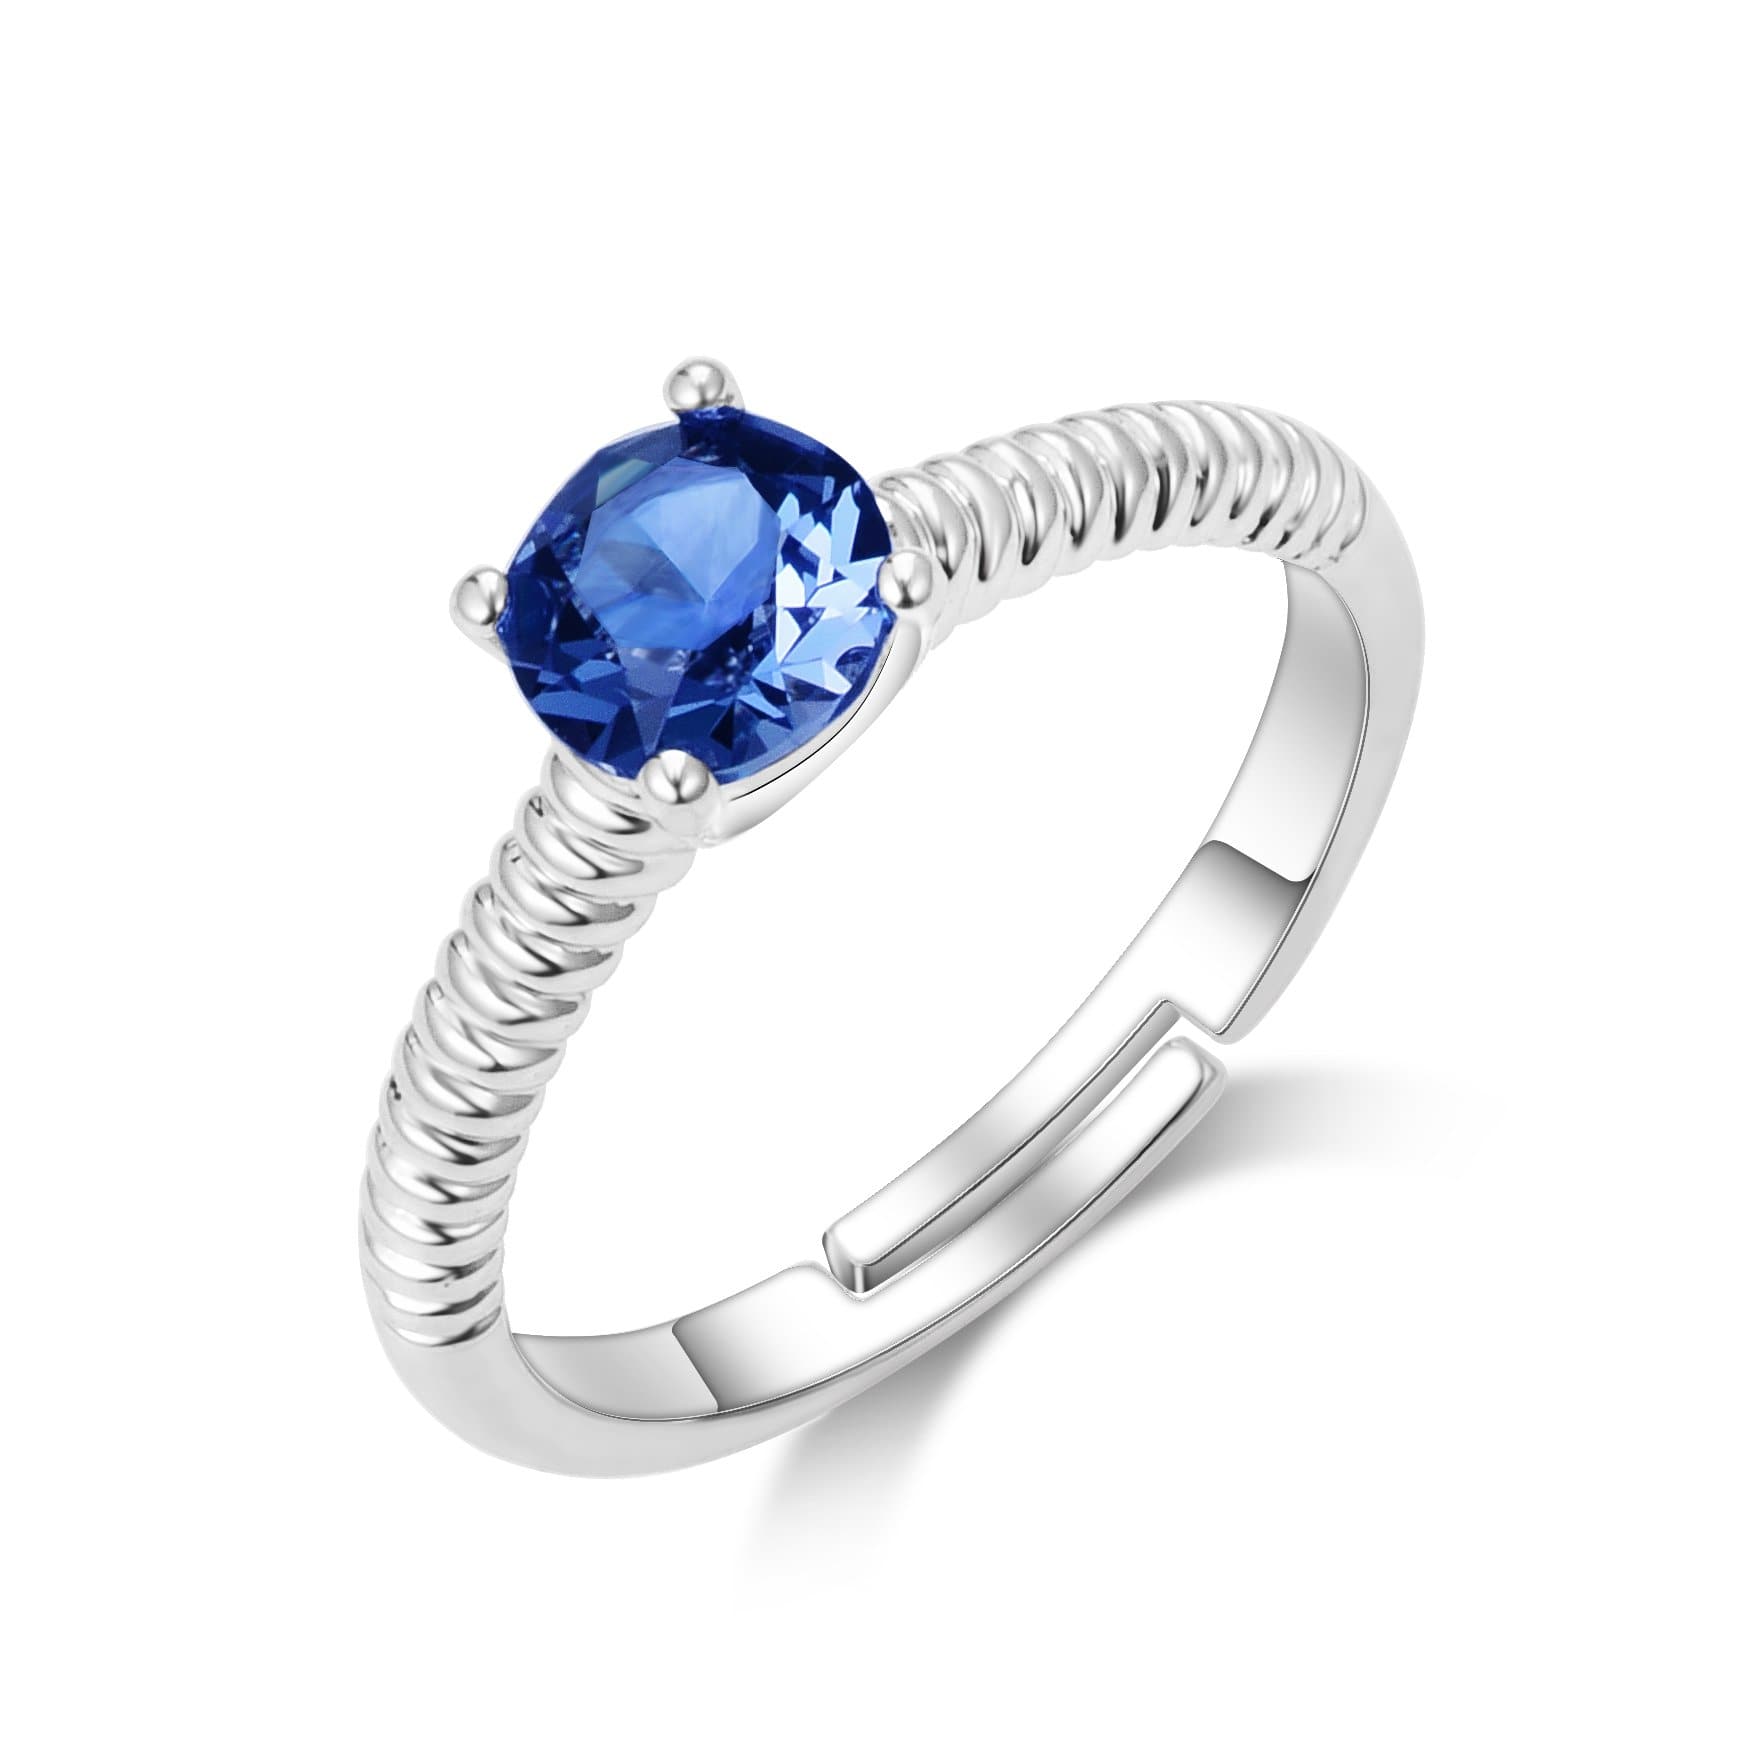 Dark Blue Adjustable Crystal Ring Created with Zircondia® Crystals